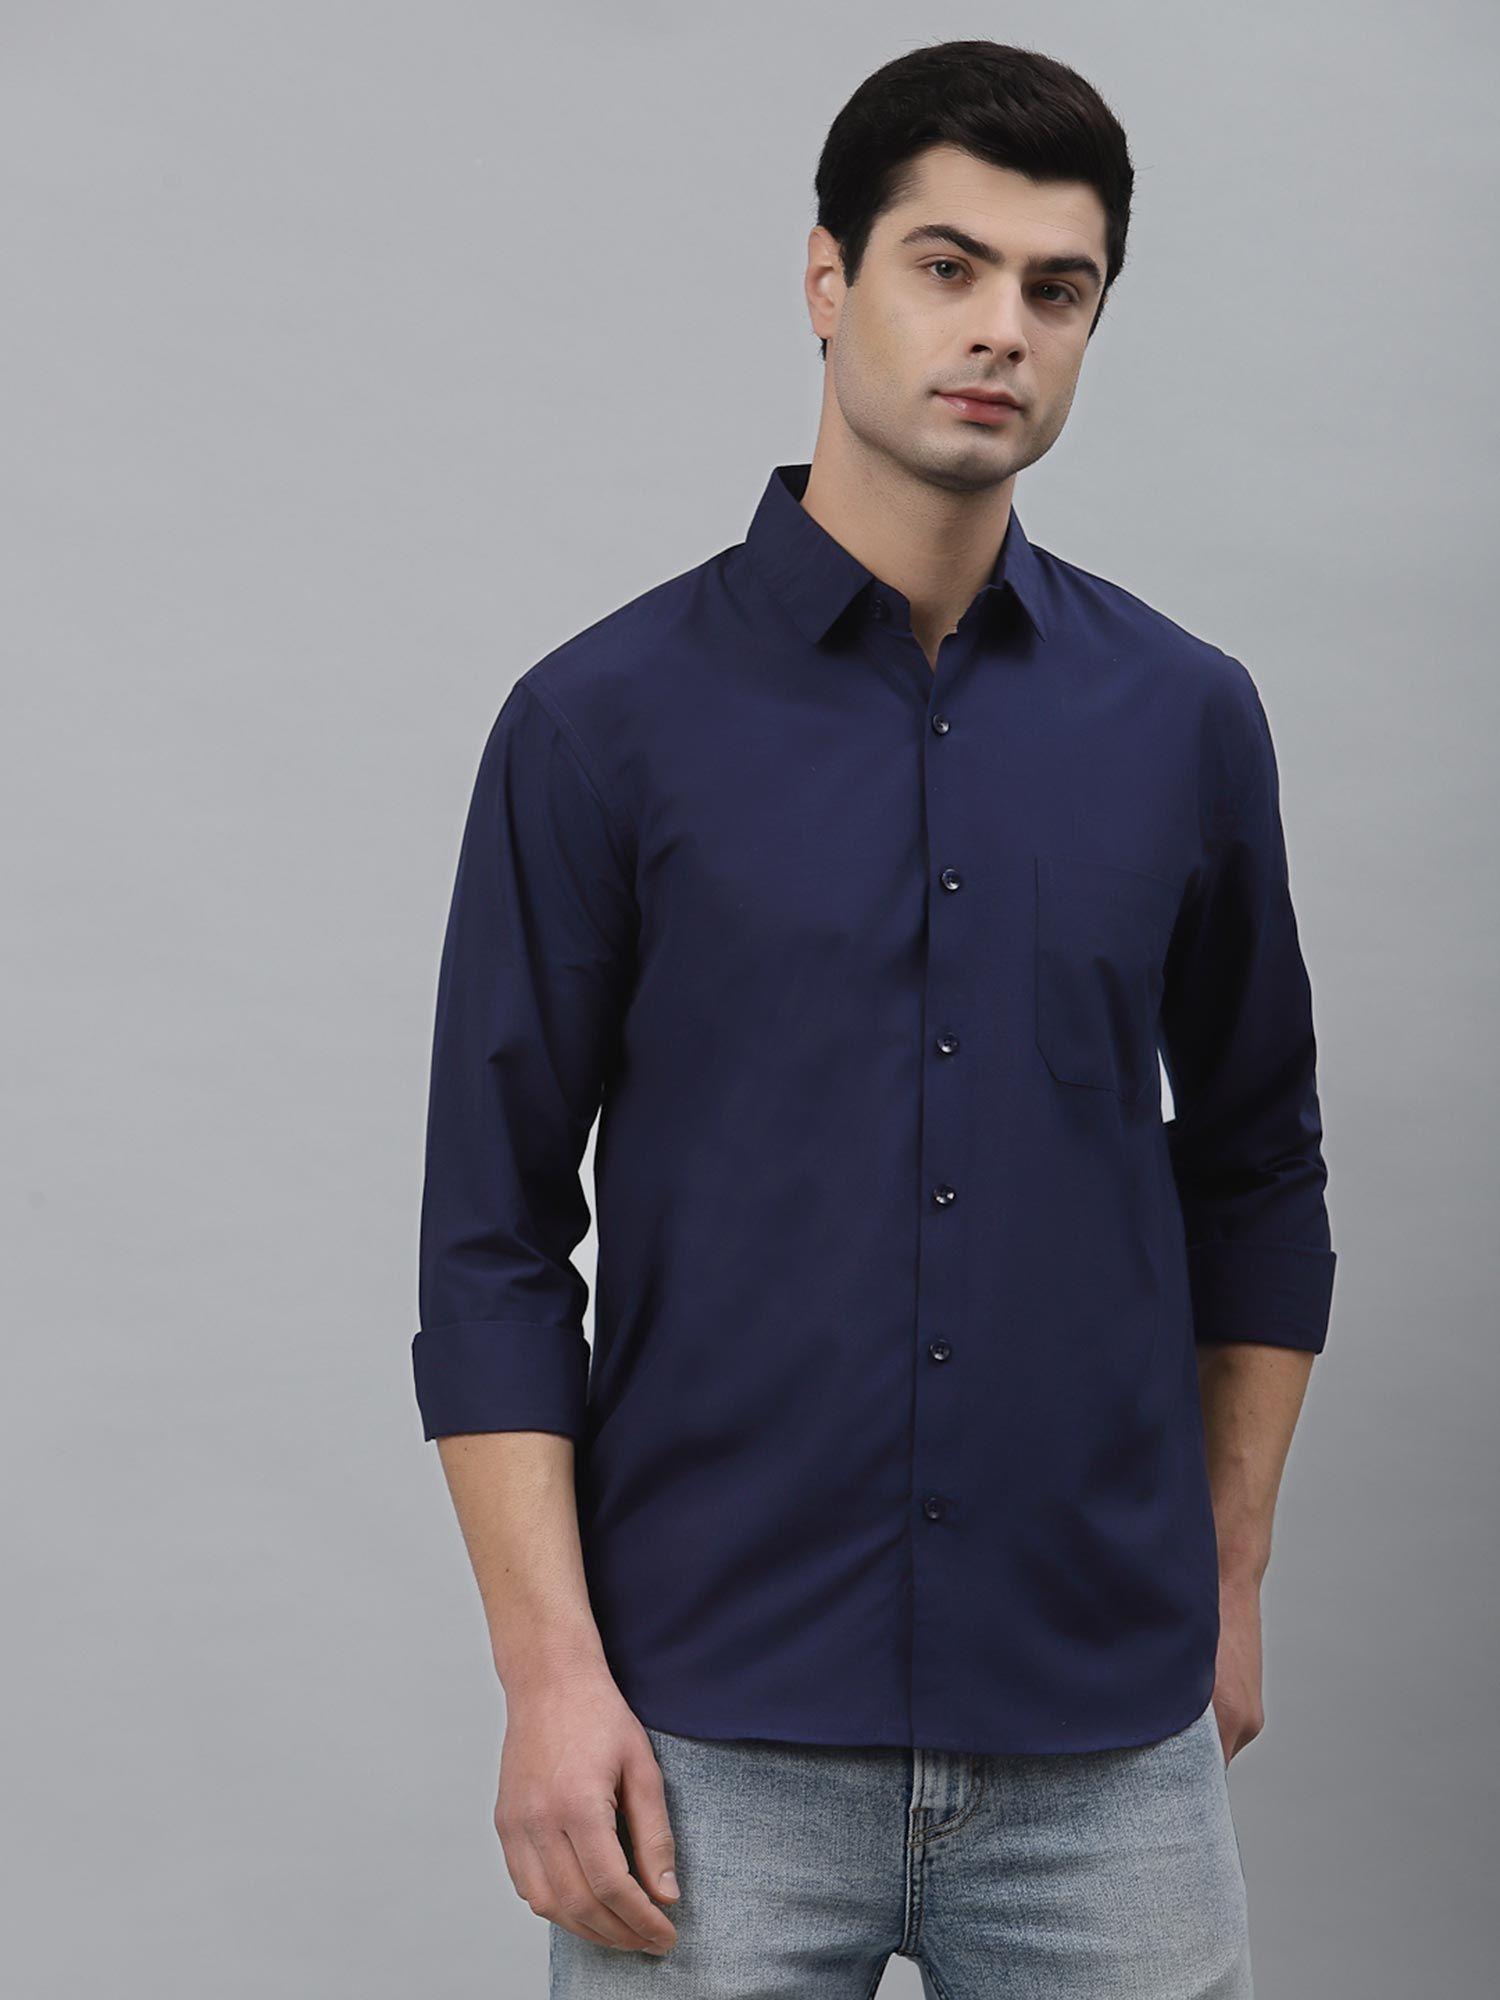 men navy blue full sleeves casual shirt